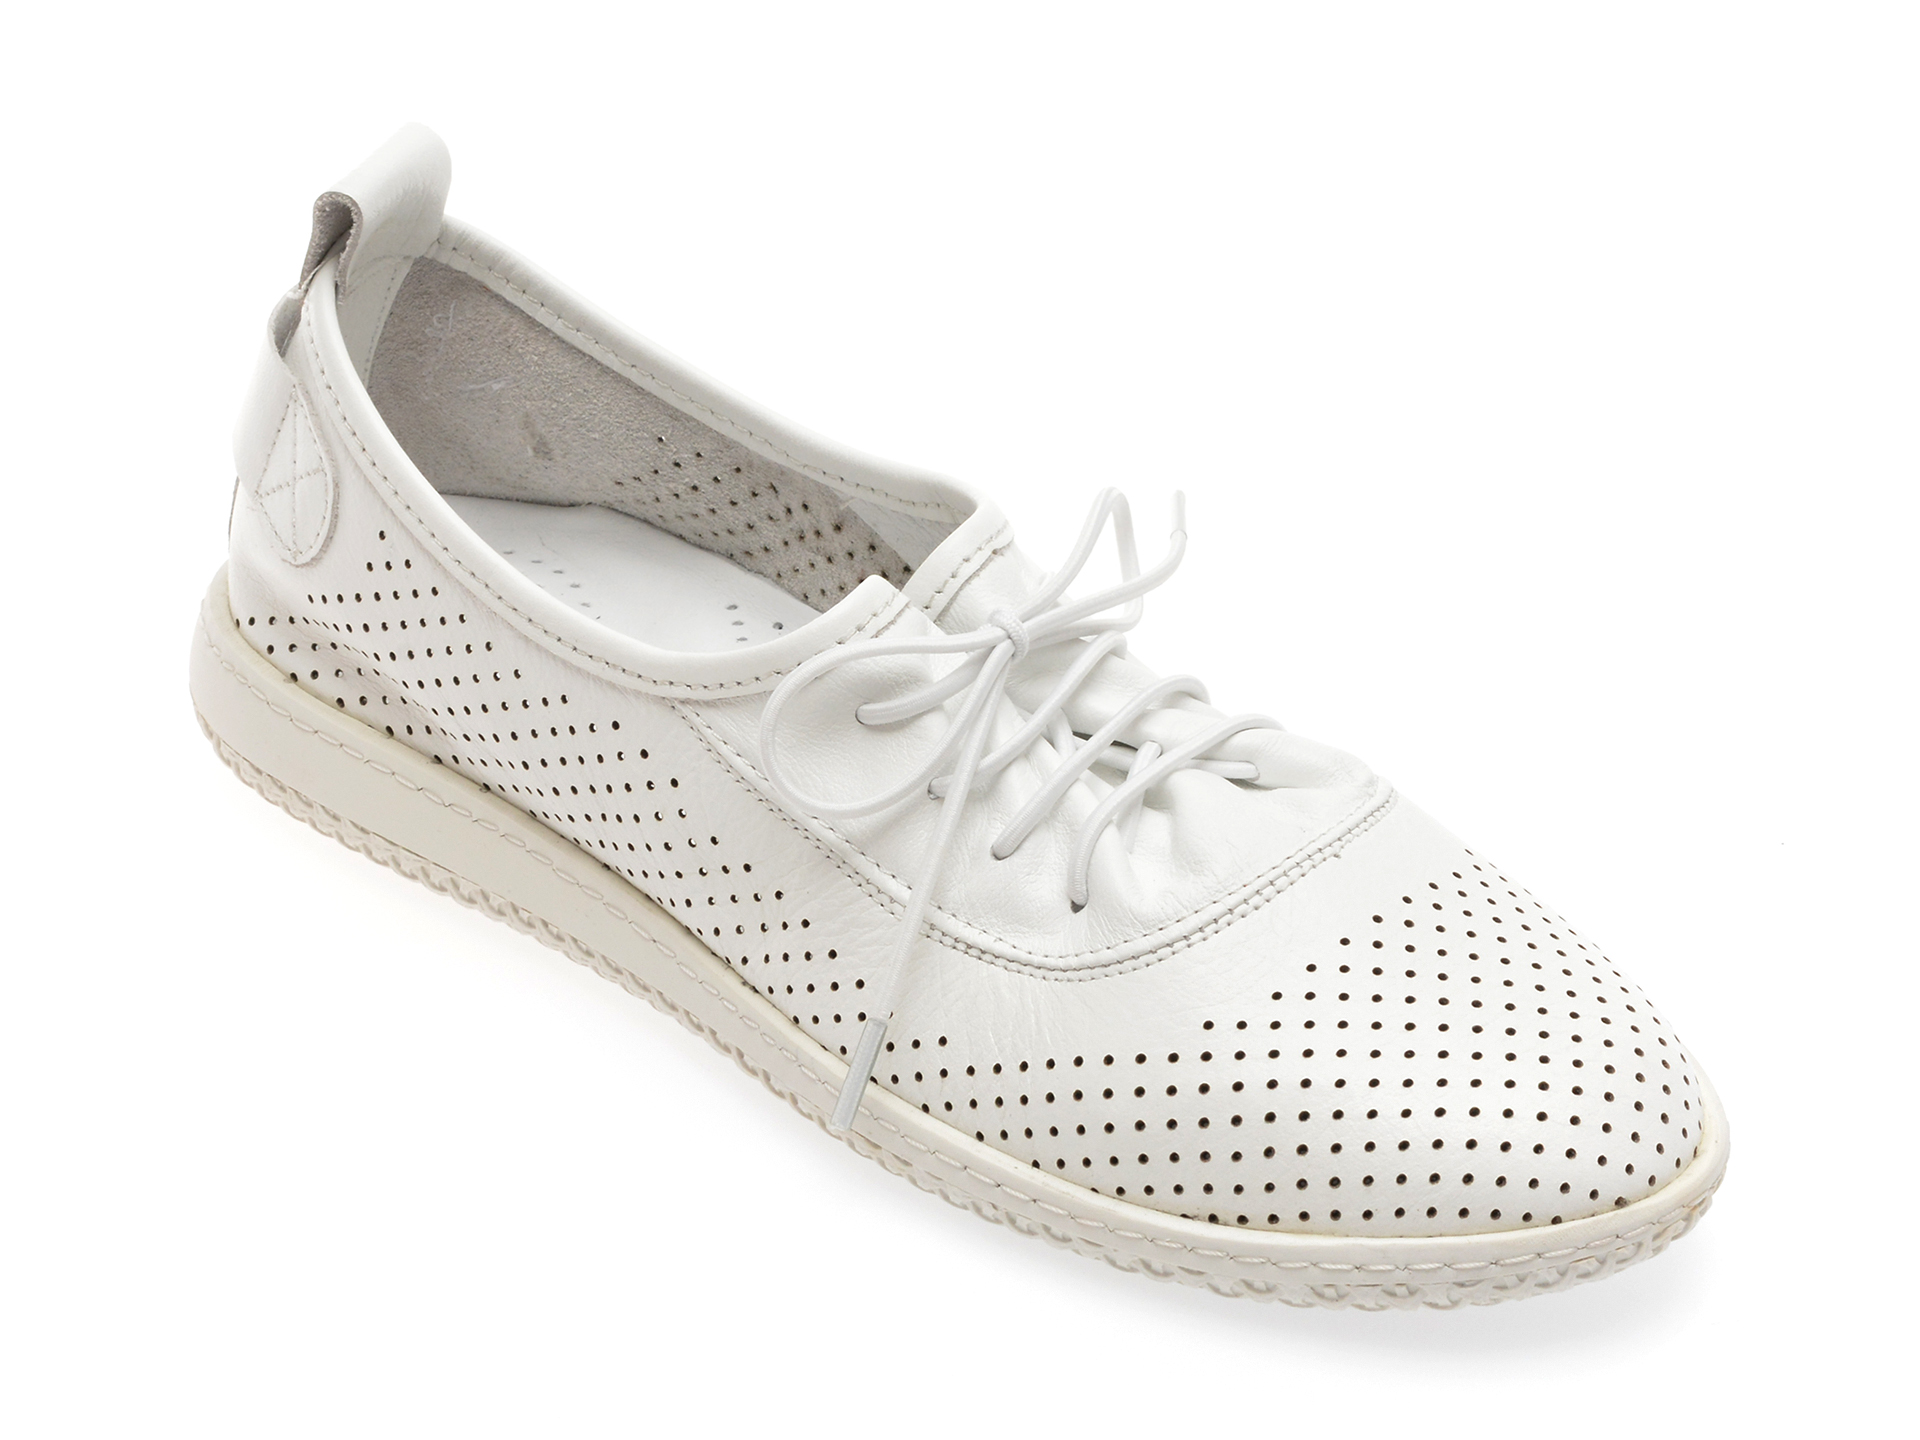 Pantofi casual MOLLY BESSA albi, 5002020, din piele naturala